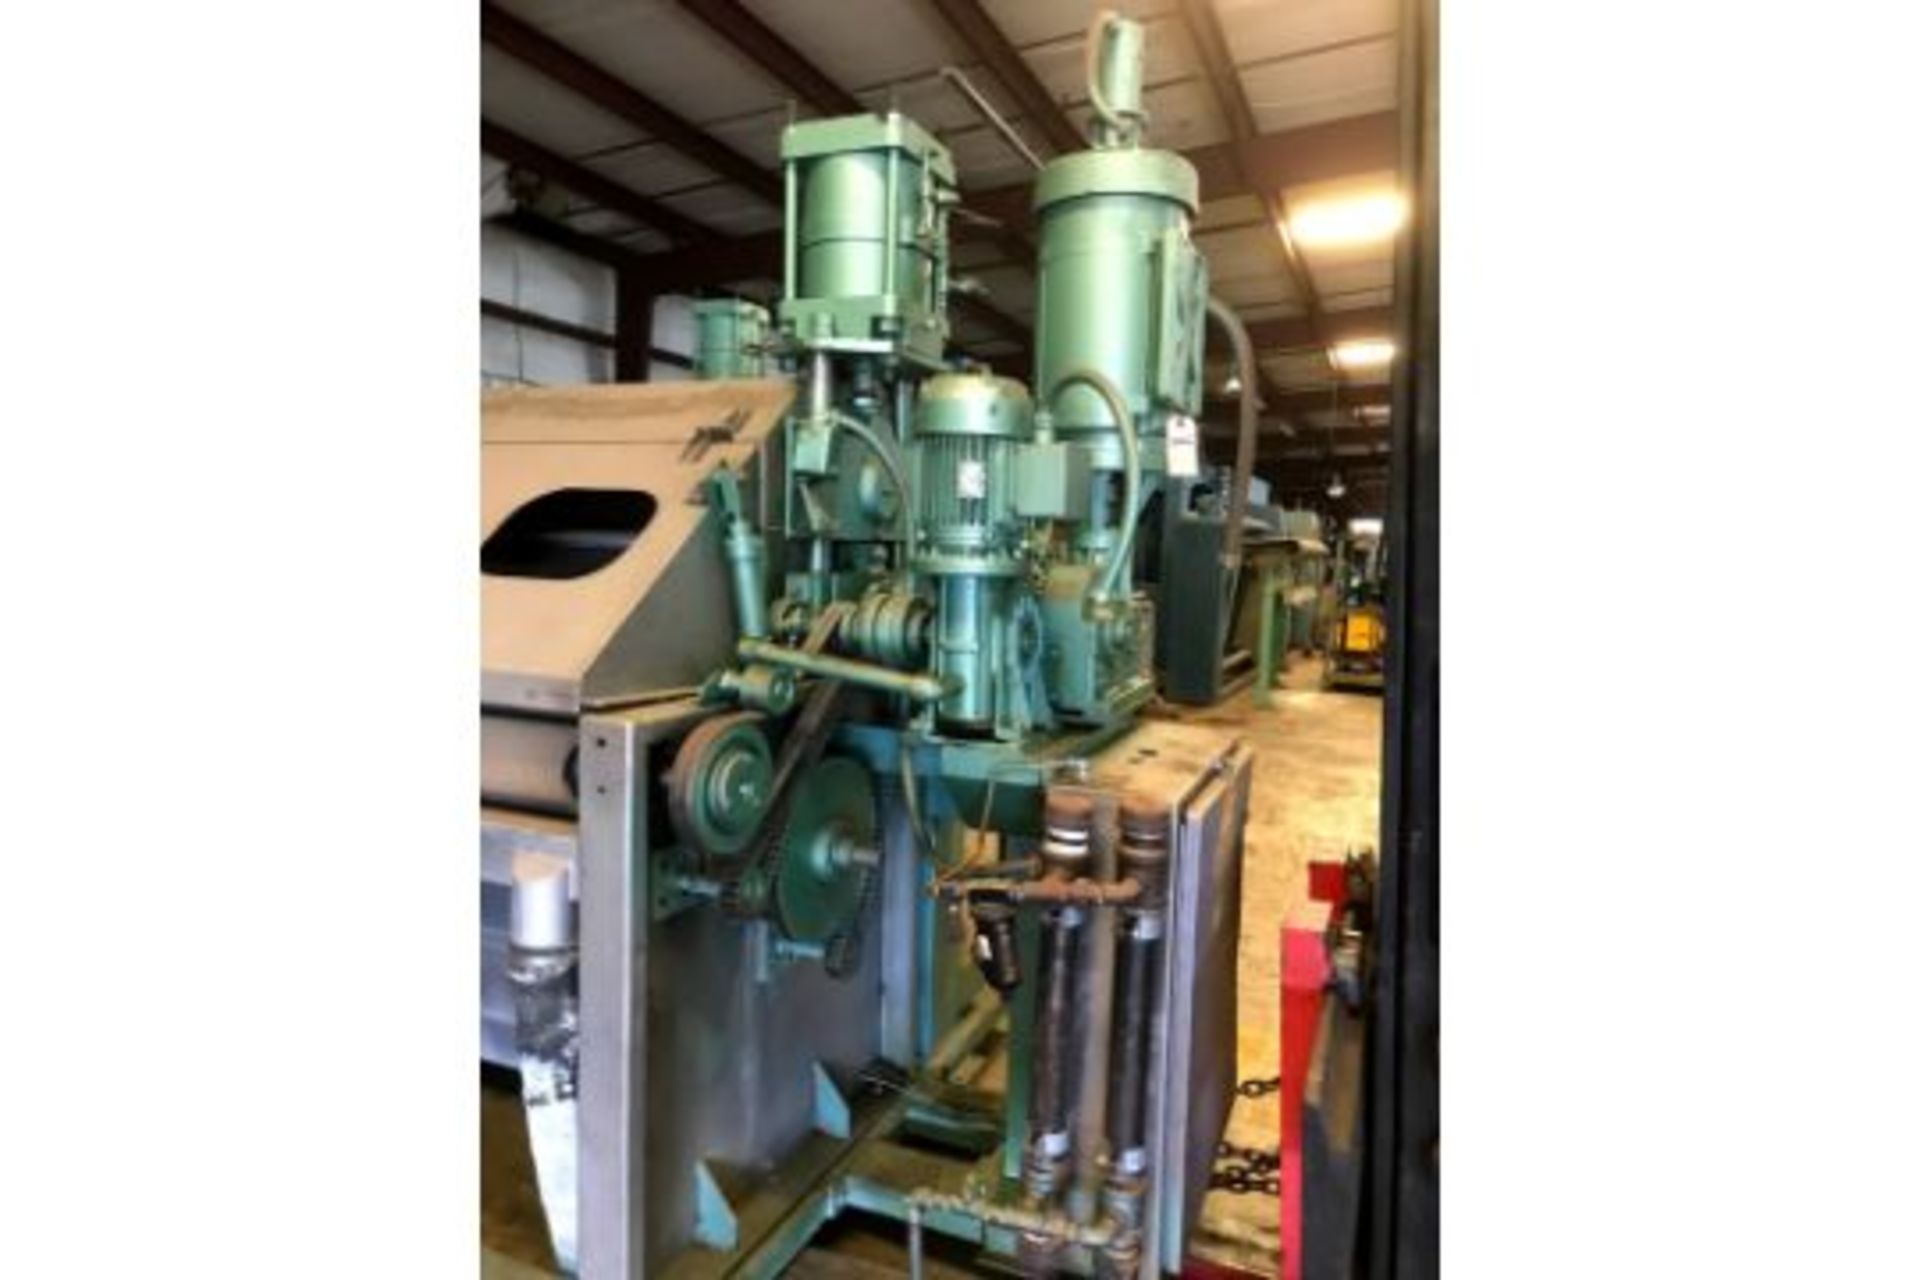 Gessner Squeezer Air Water Pressure, Working Length 14.5', Rigging Fee $250 - Image 3 of 7